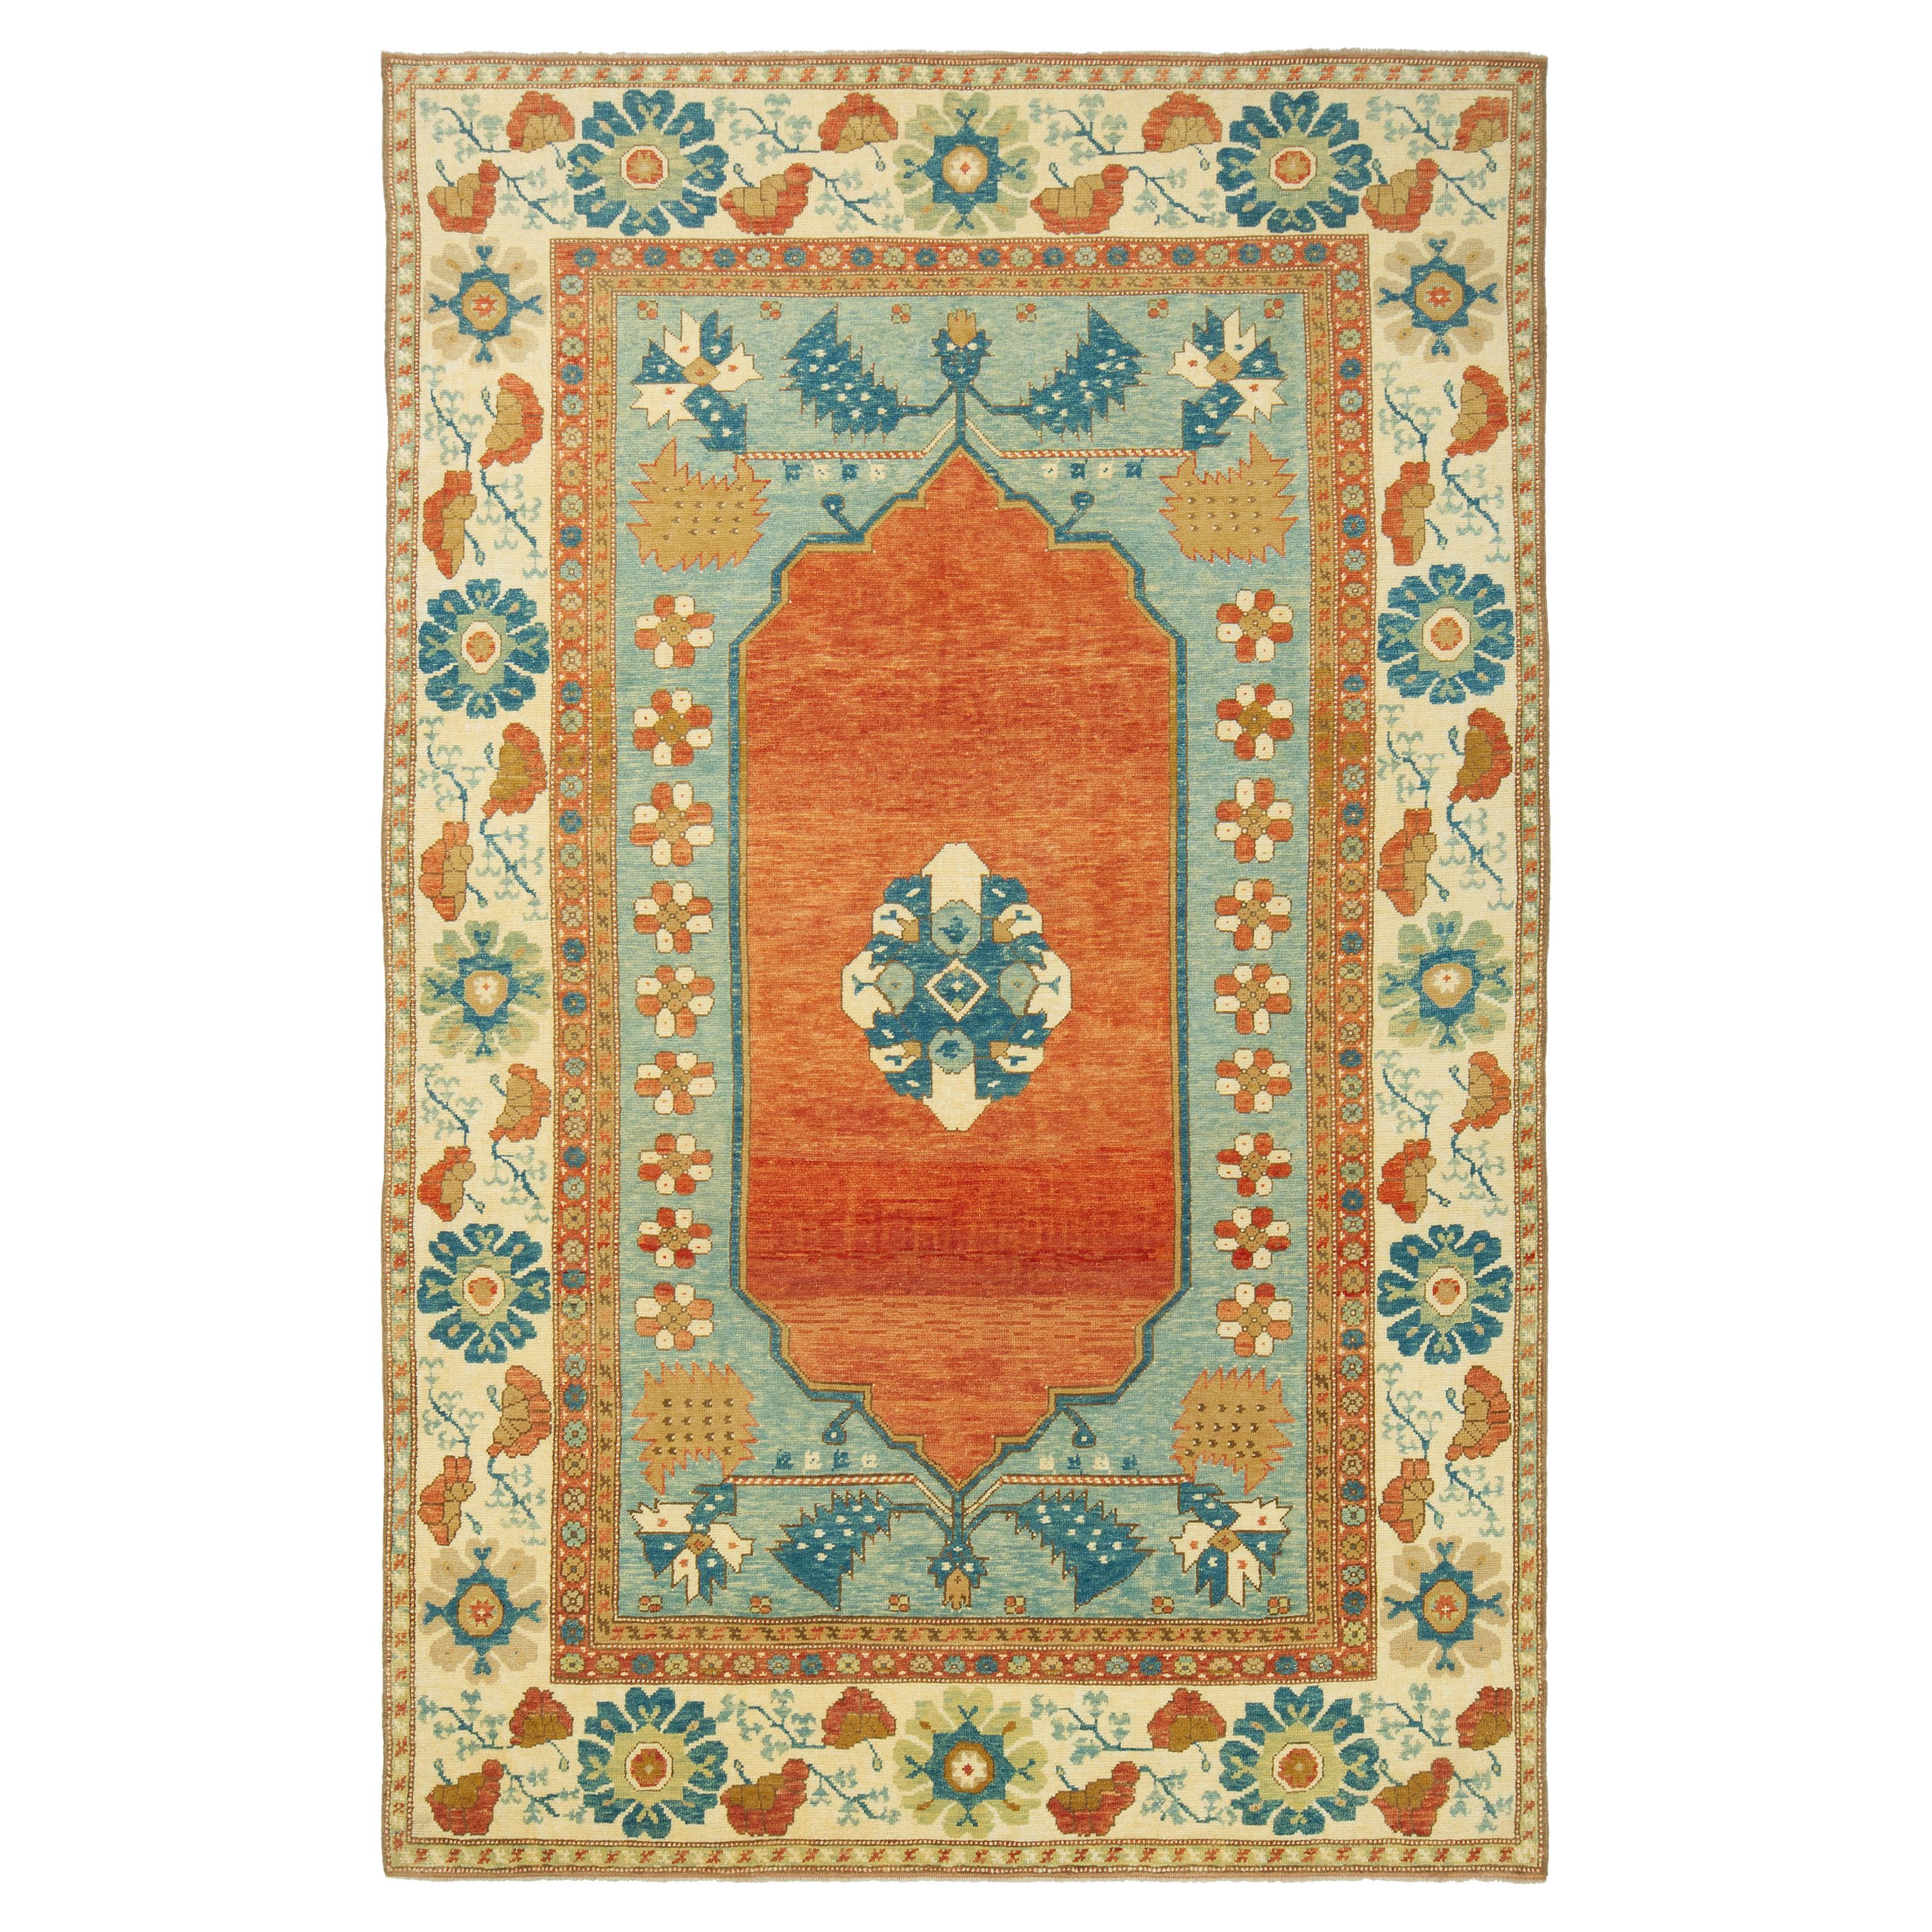 Ararat Rugs Medallion Rug 18th C Anatolian Turkish Revival Carpet Natural Dyed